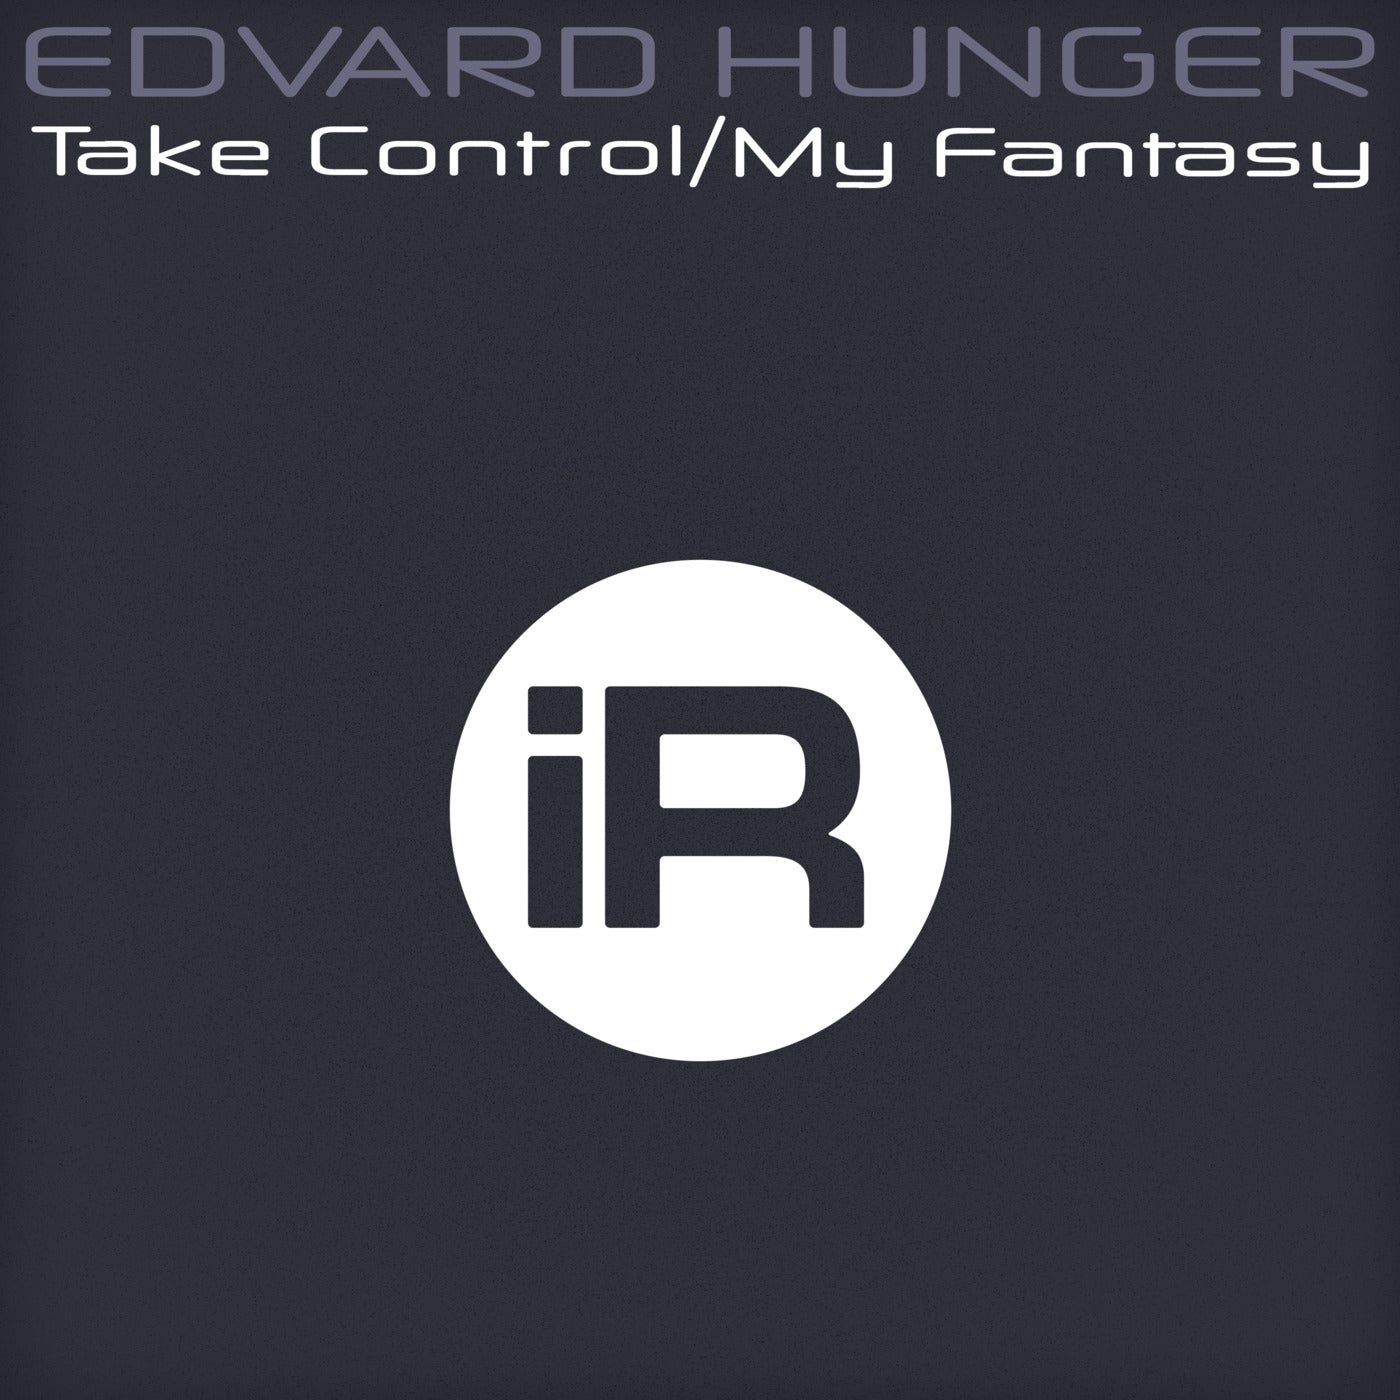 Take control / My fantasy